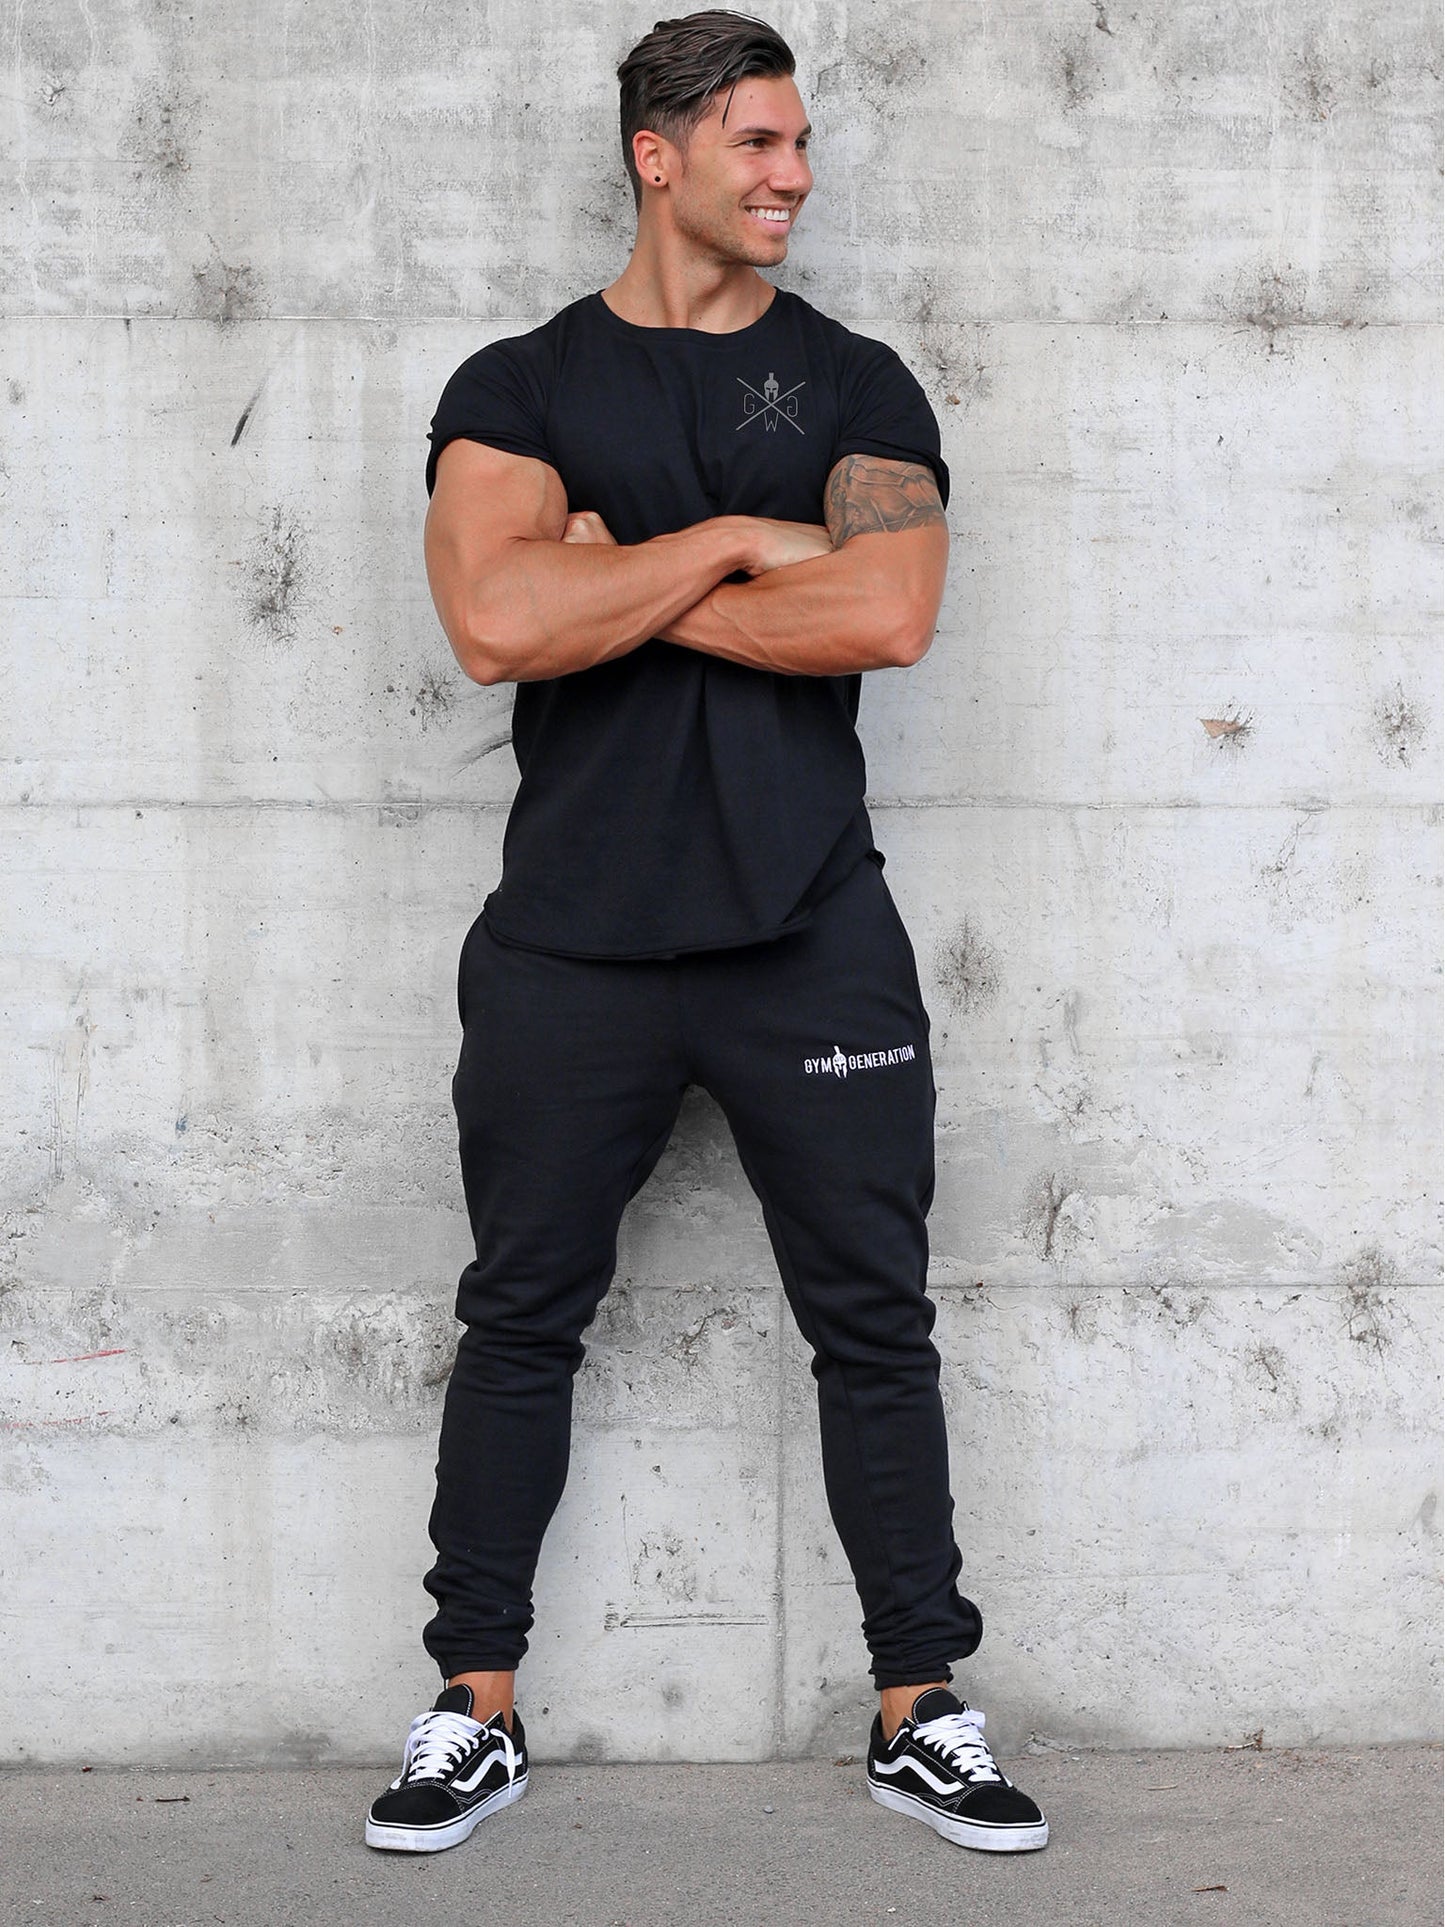 Urban Warrior T-Shirt - Black